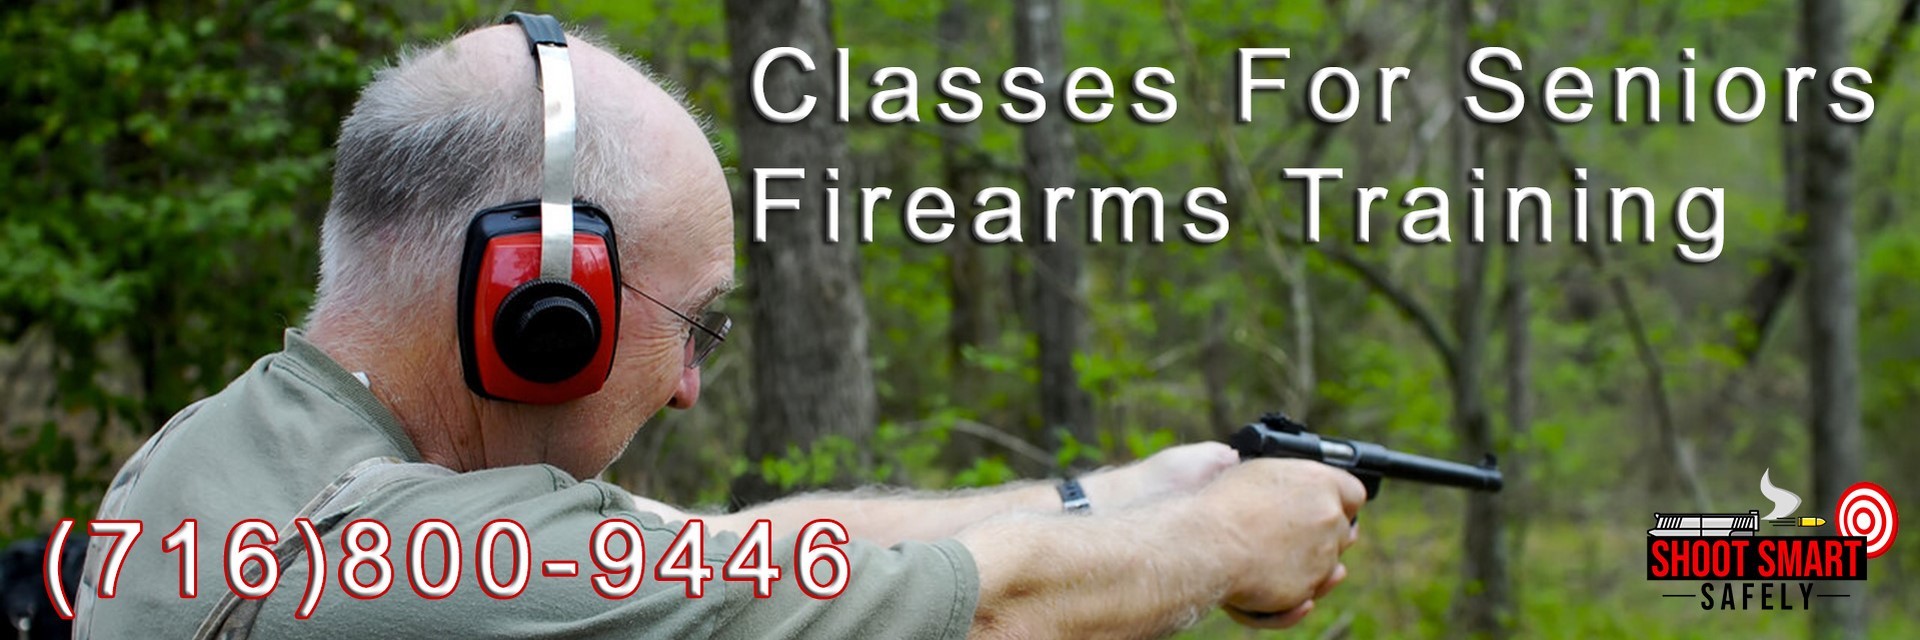 Firearms Training For Senior Citizens